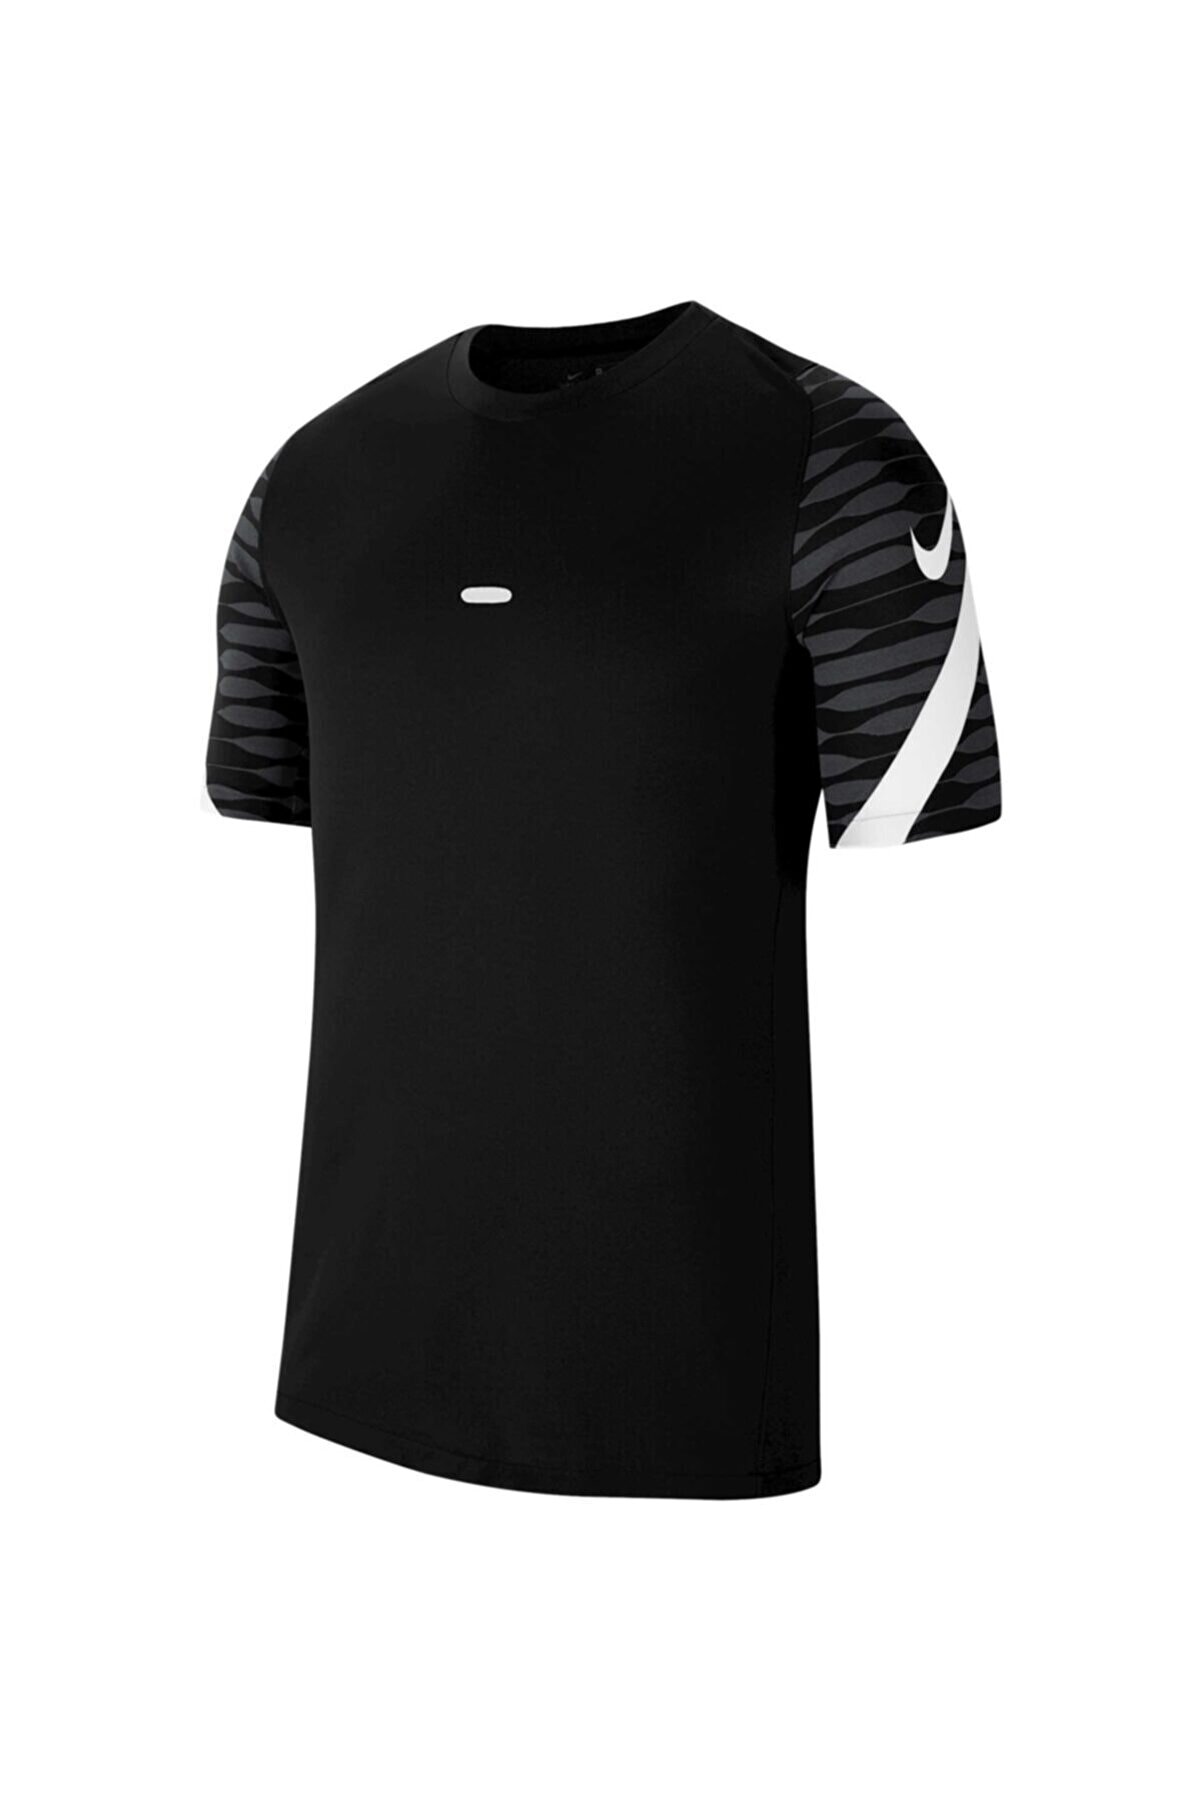 Nike Unisex Spor T-Shirt